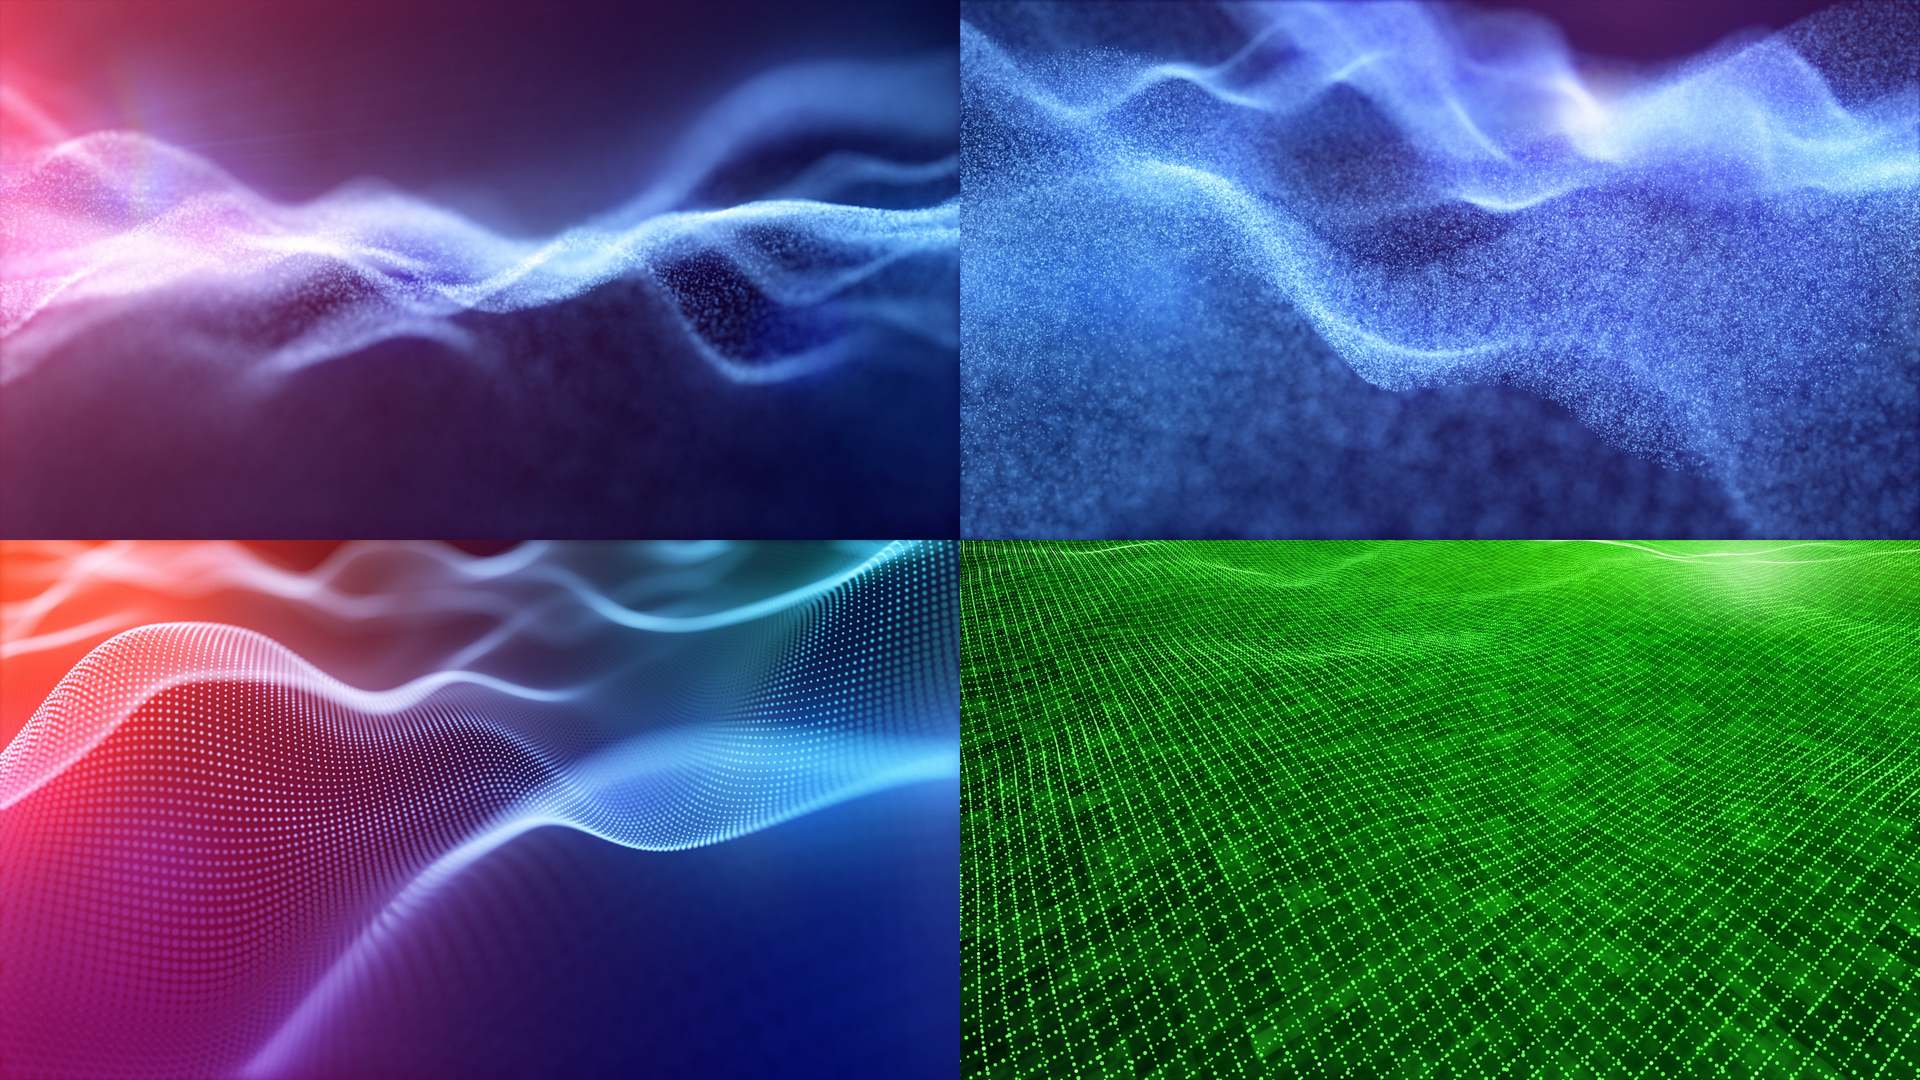 8K UHD Wallpapers Particle Waves.jpg